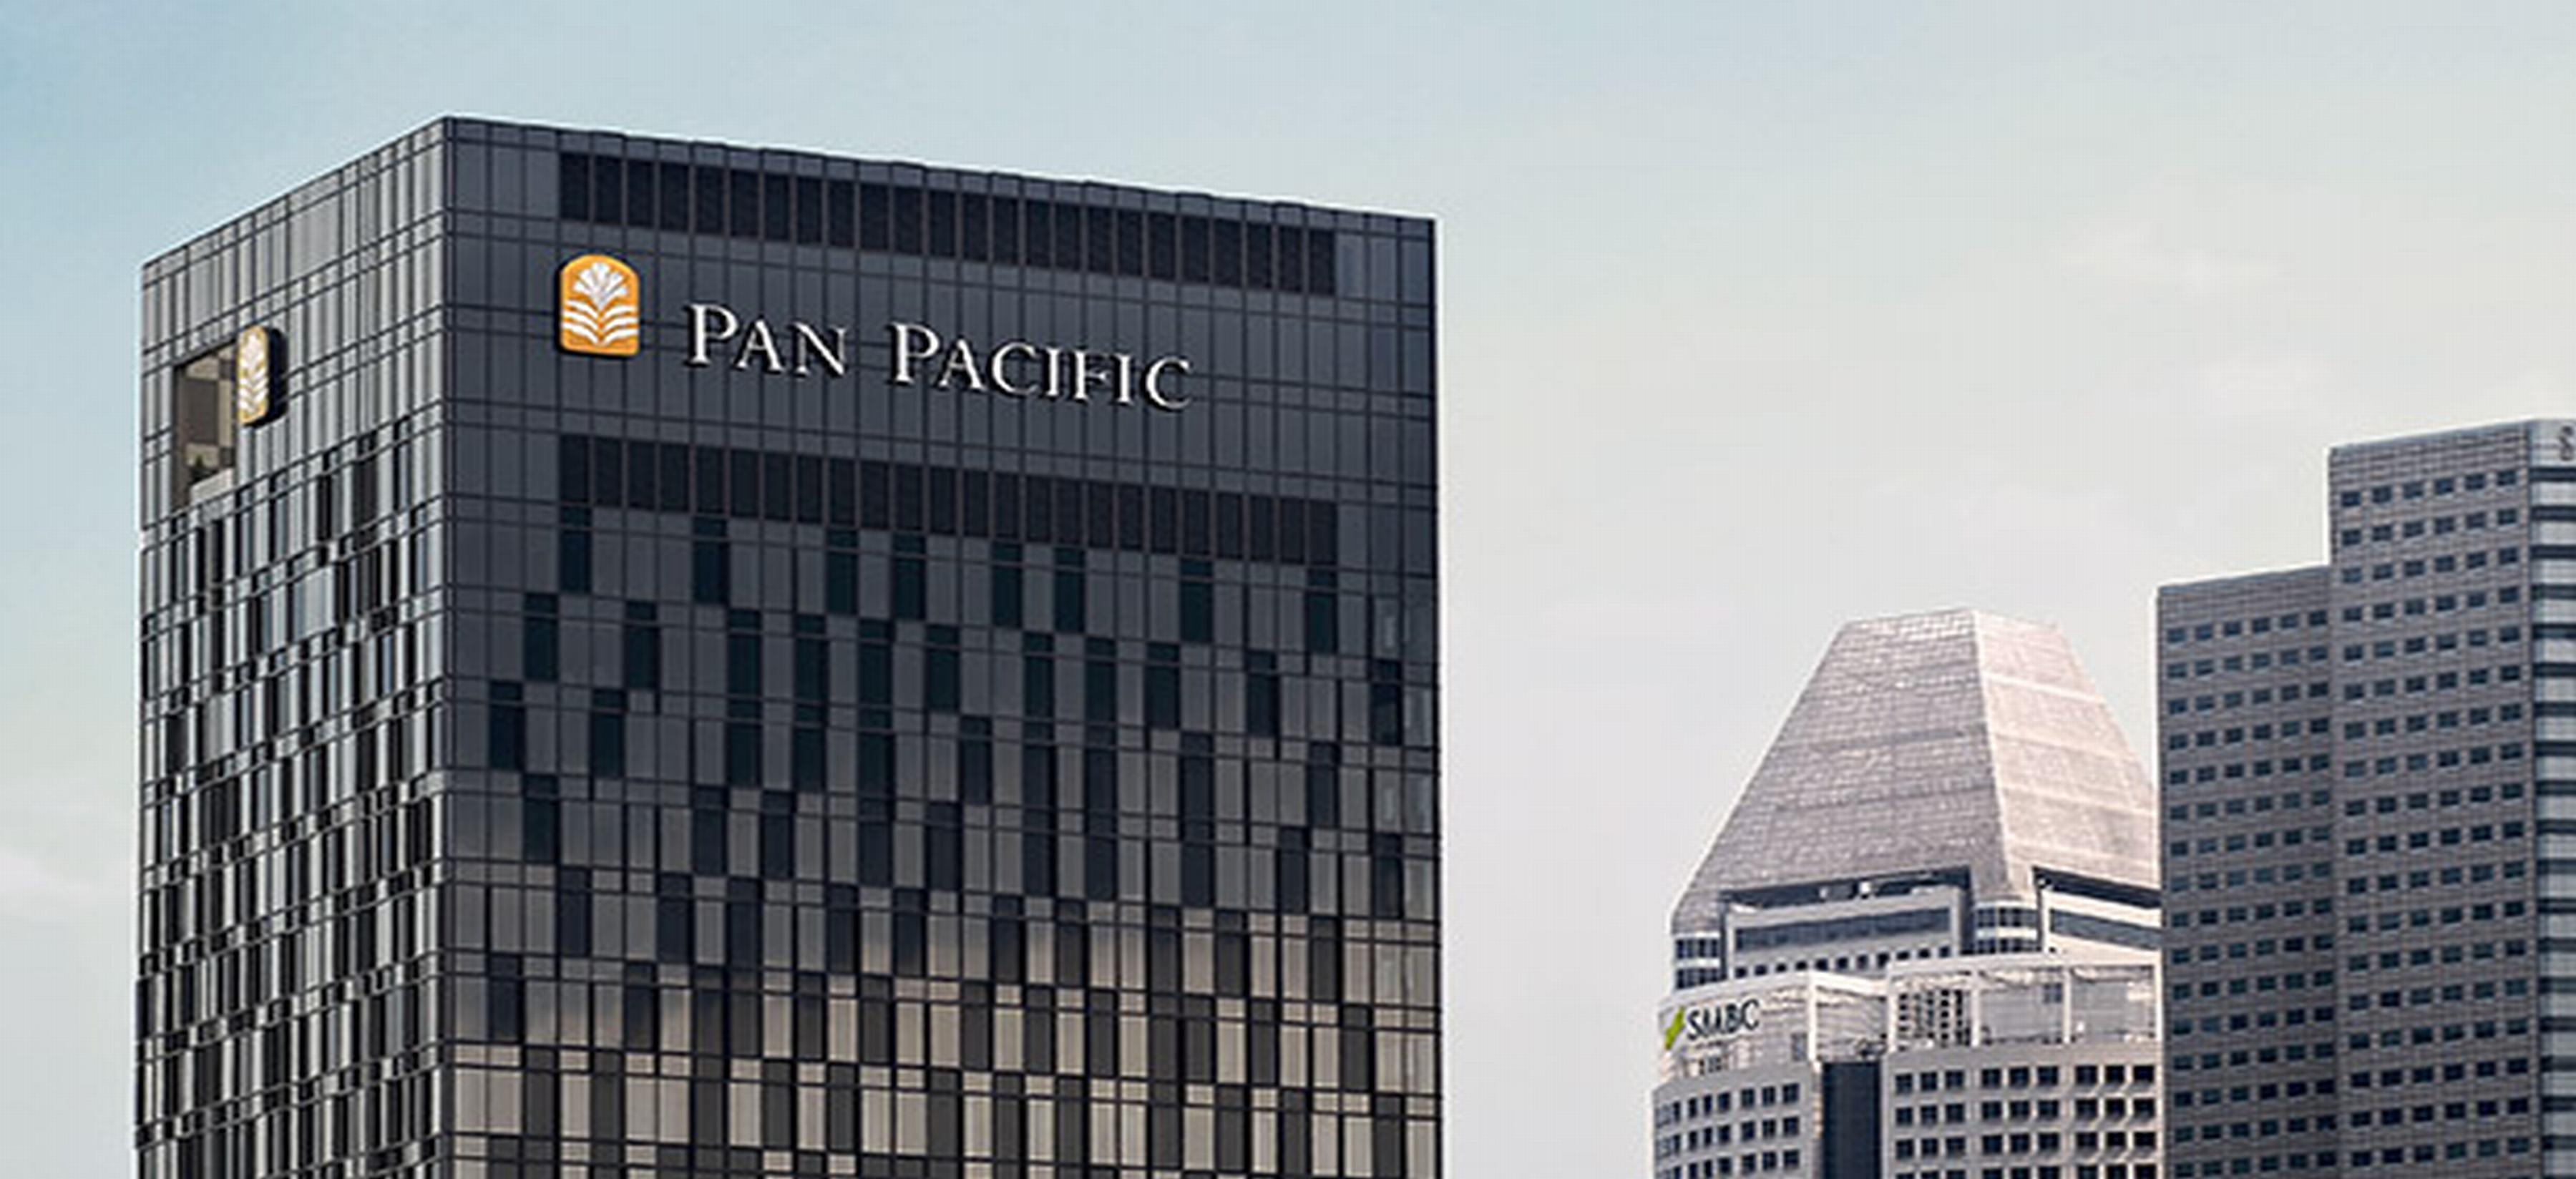 Pan Pacific Serviced Suites Beach Road, Szingapúr Kültér fotó